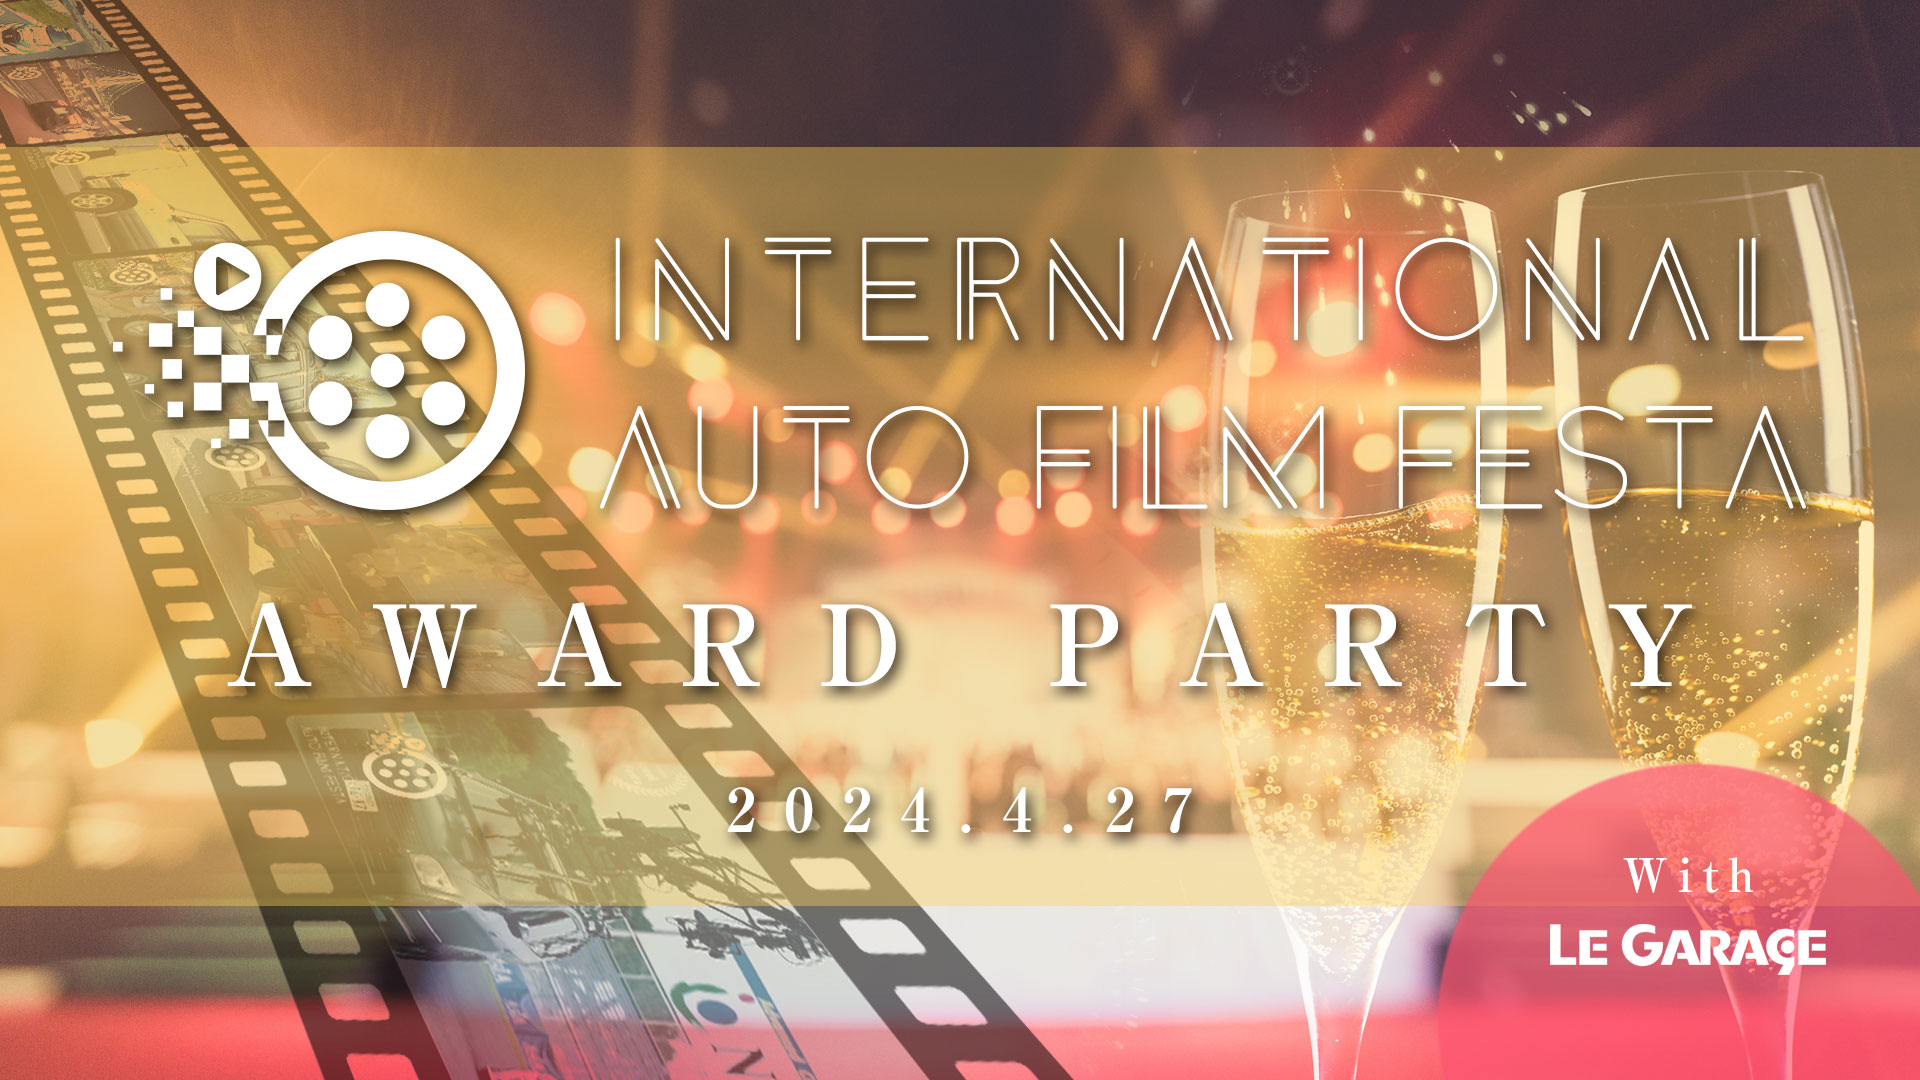 International Auto Film Festa 2024 AWARD PARTY